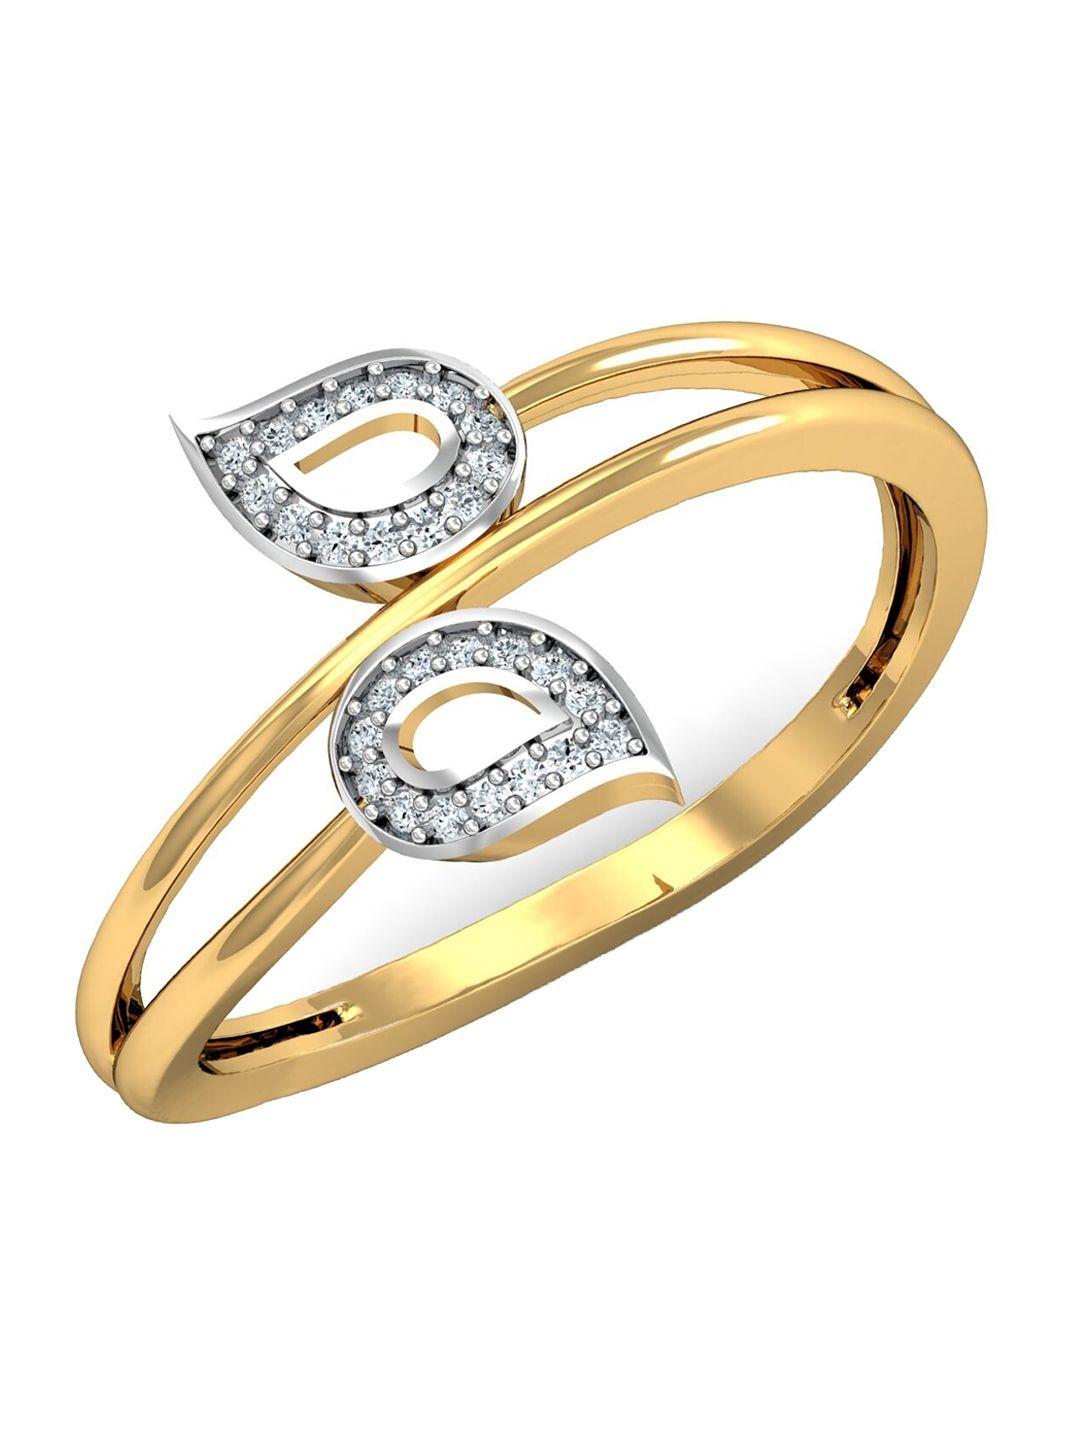 kuberbox 18kt gold diamond studded ring-1.7gm